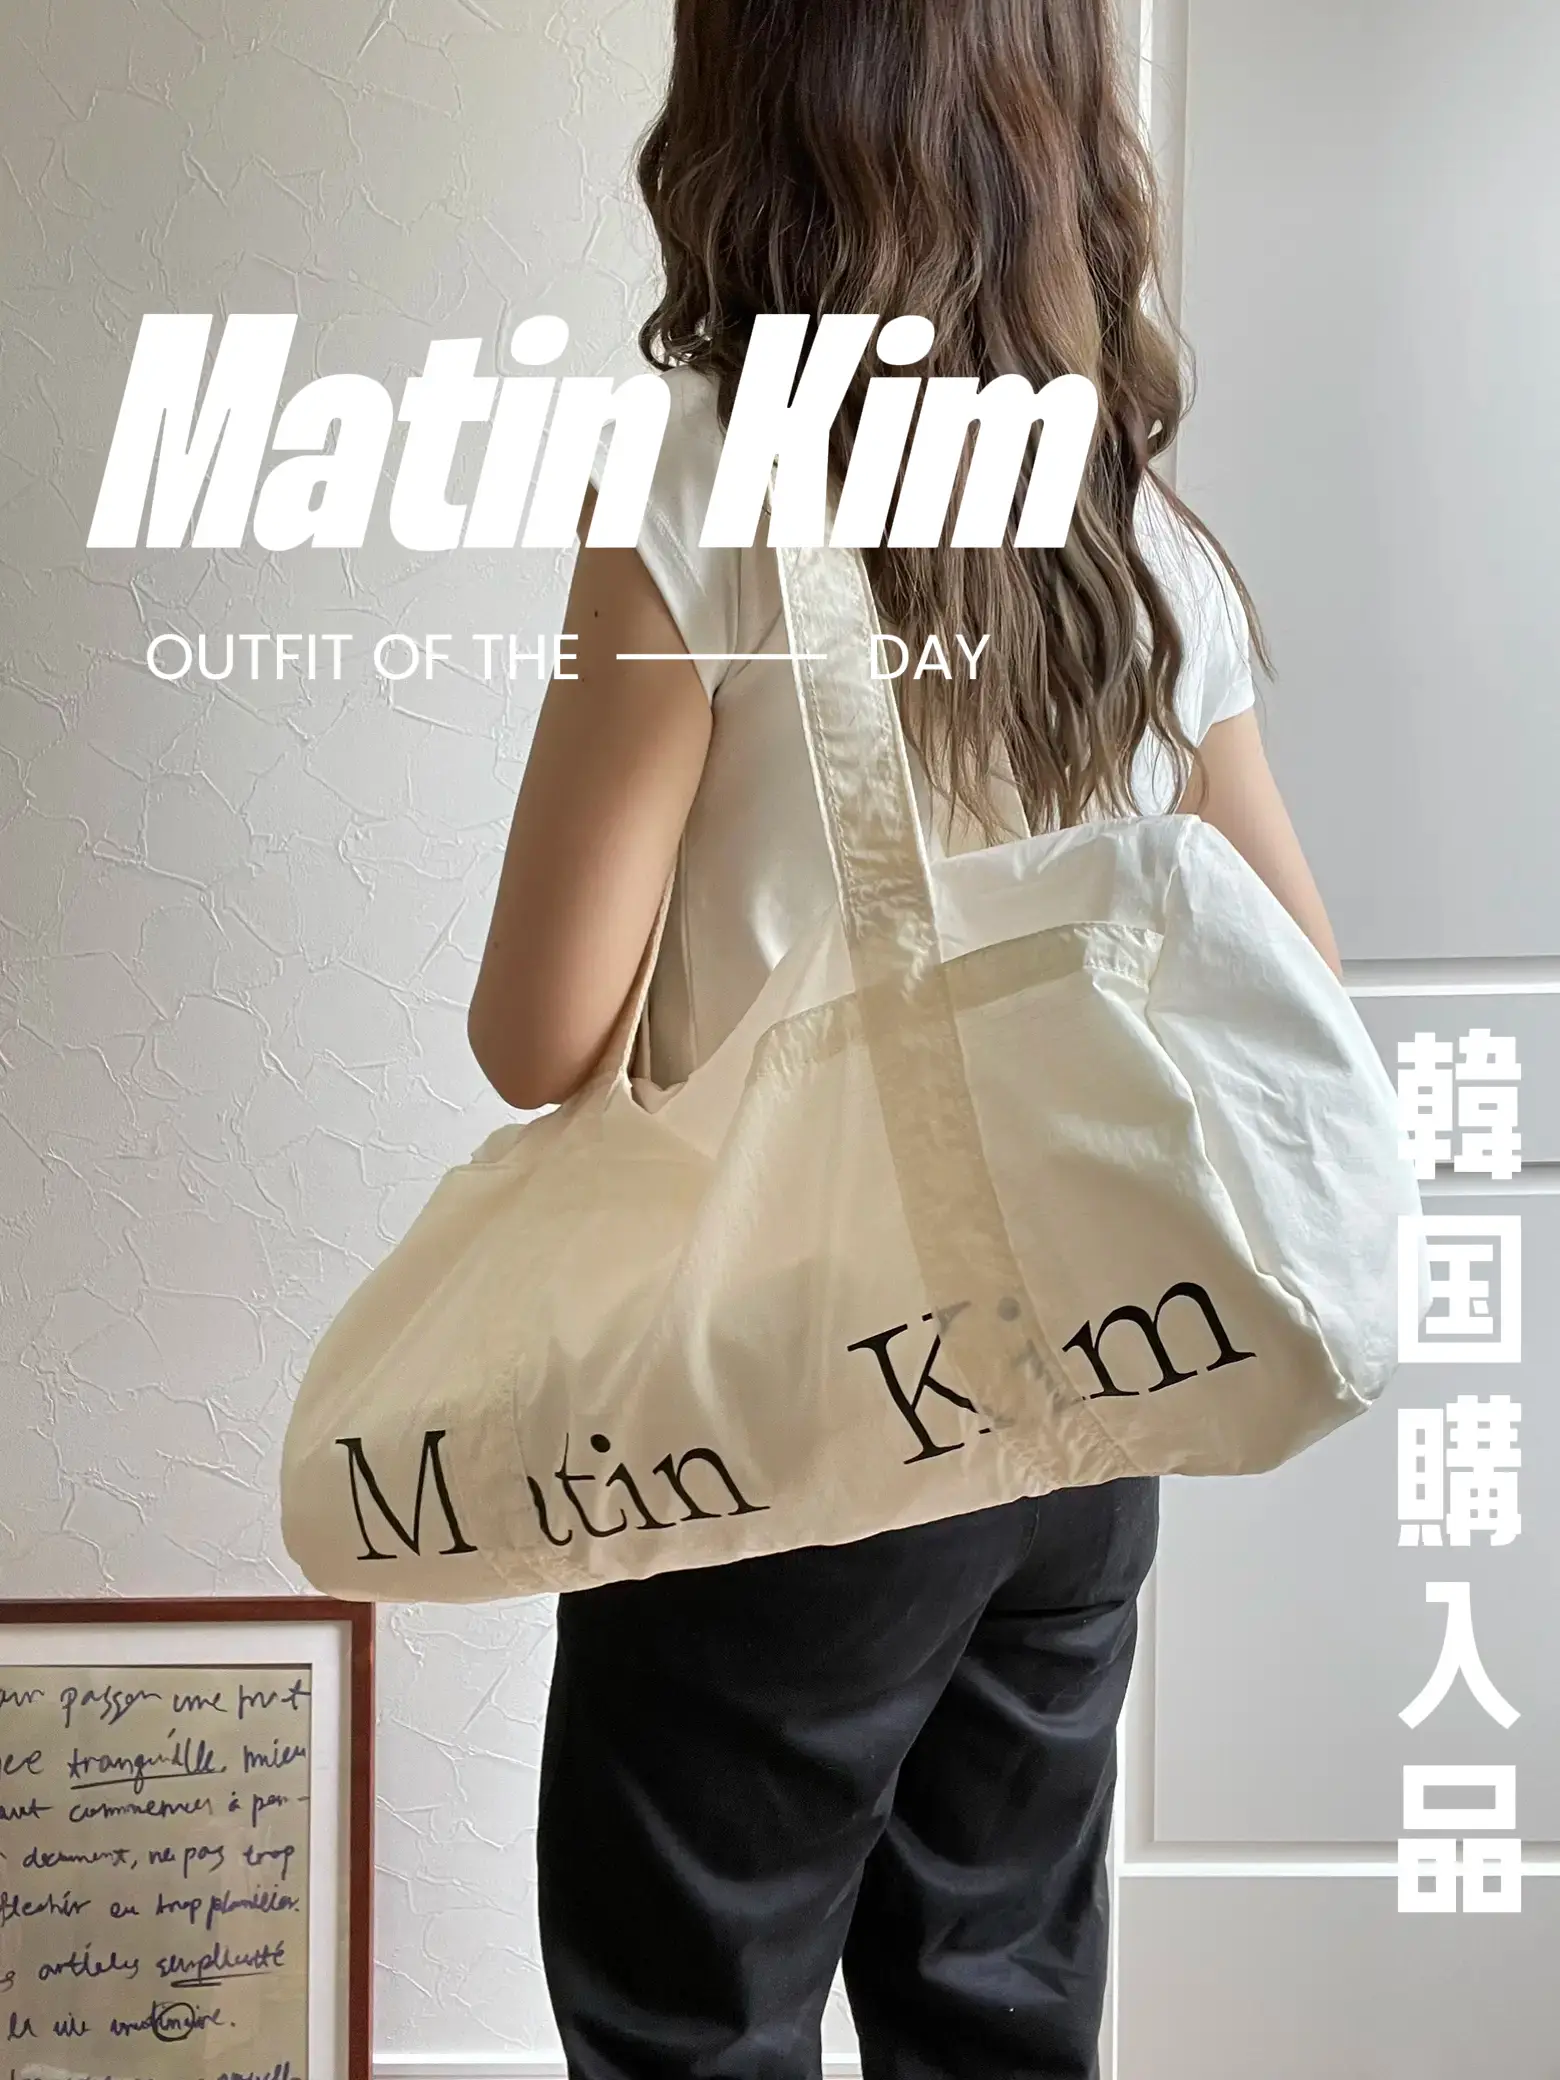 Bags - MATINKIM